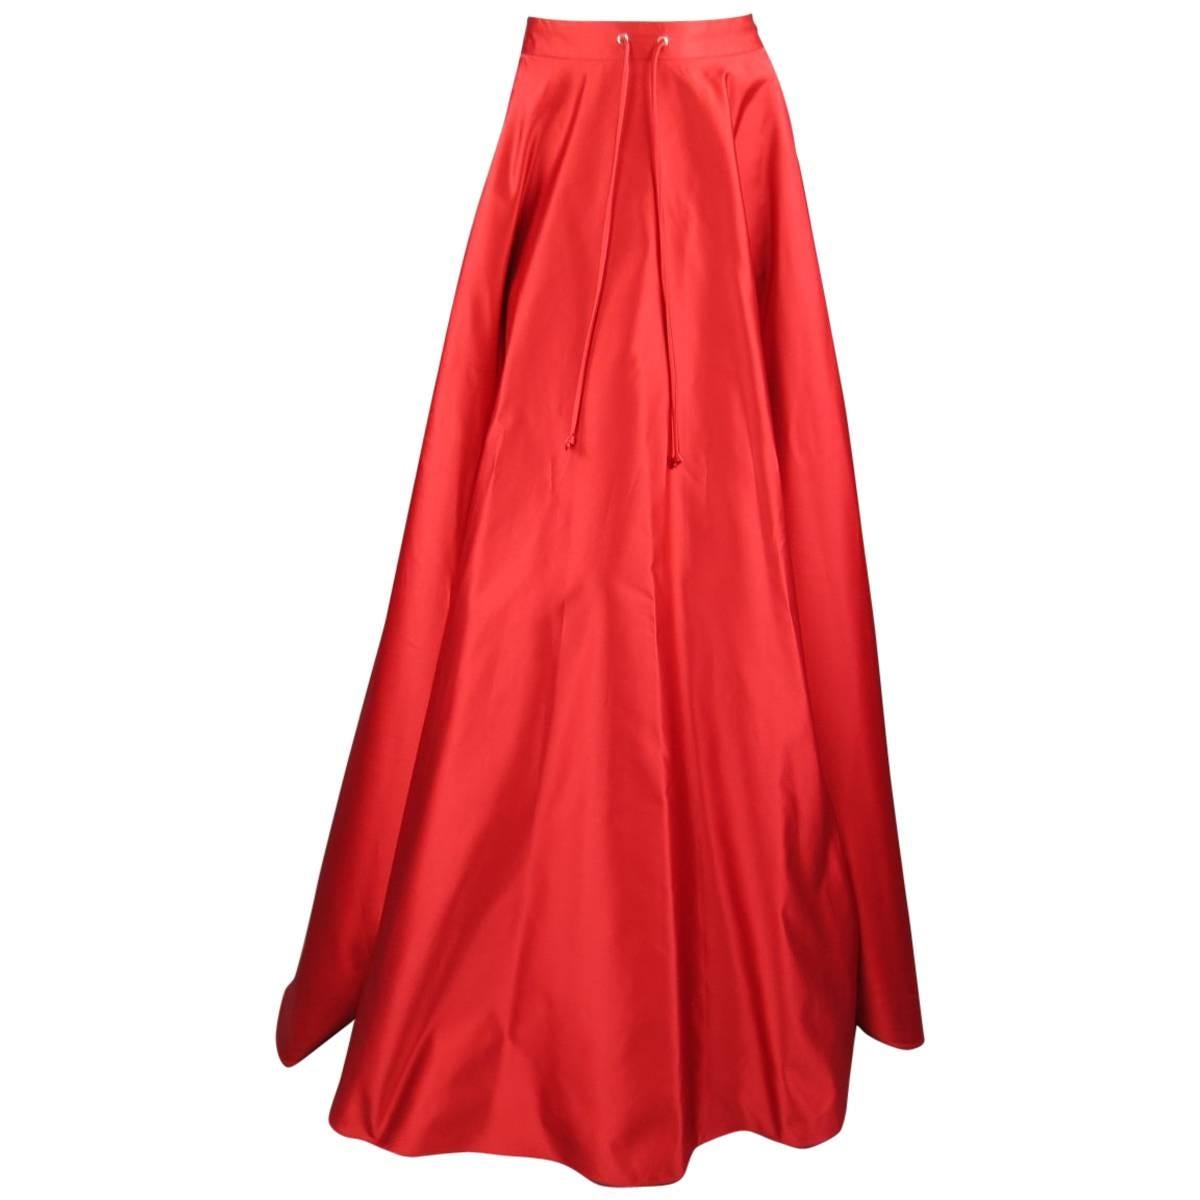 RALPH LAUREN COLLECTION Size 8 Red Silk Satin Full Length Drawstring Maxi Skirt